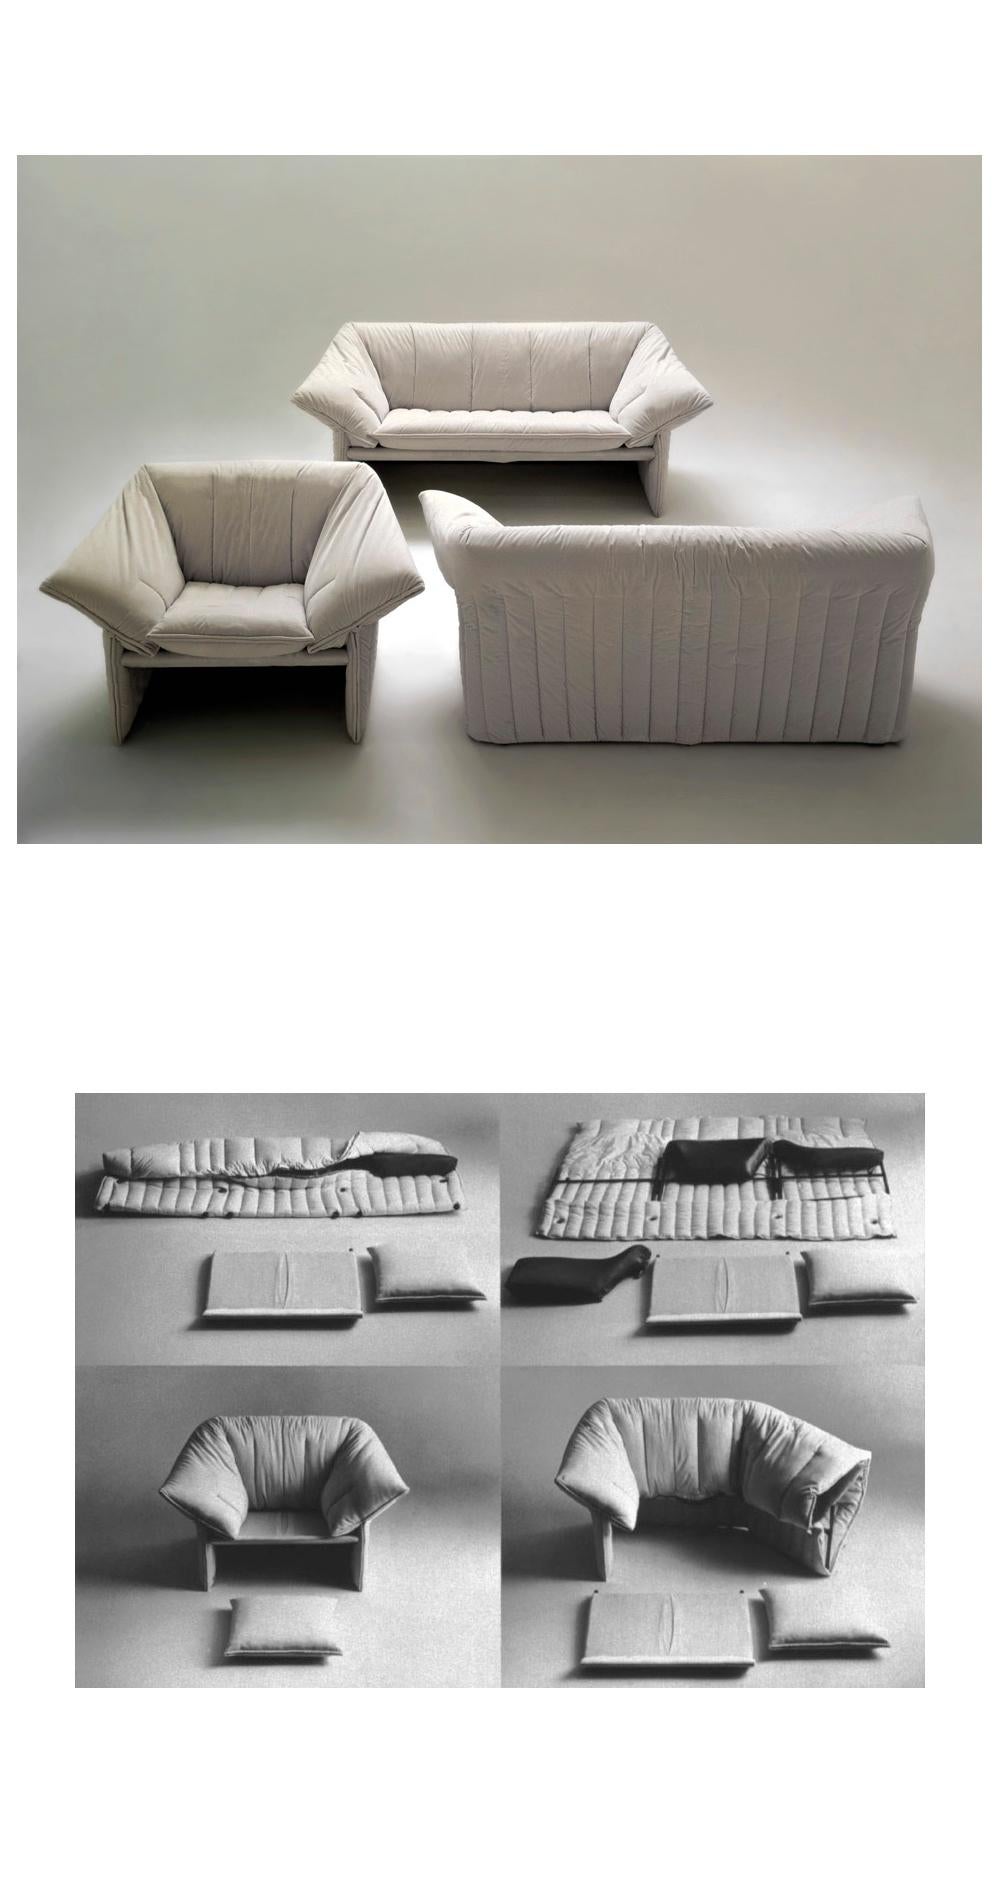 'Le Stelle' Three Seat Sofa by Mario Bellini for B&B Italia, c. 1974, Signed 12